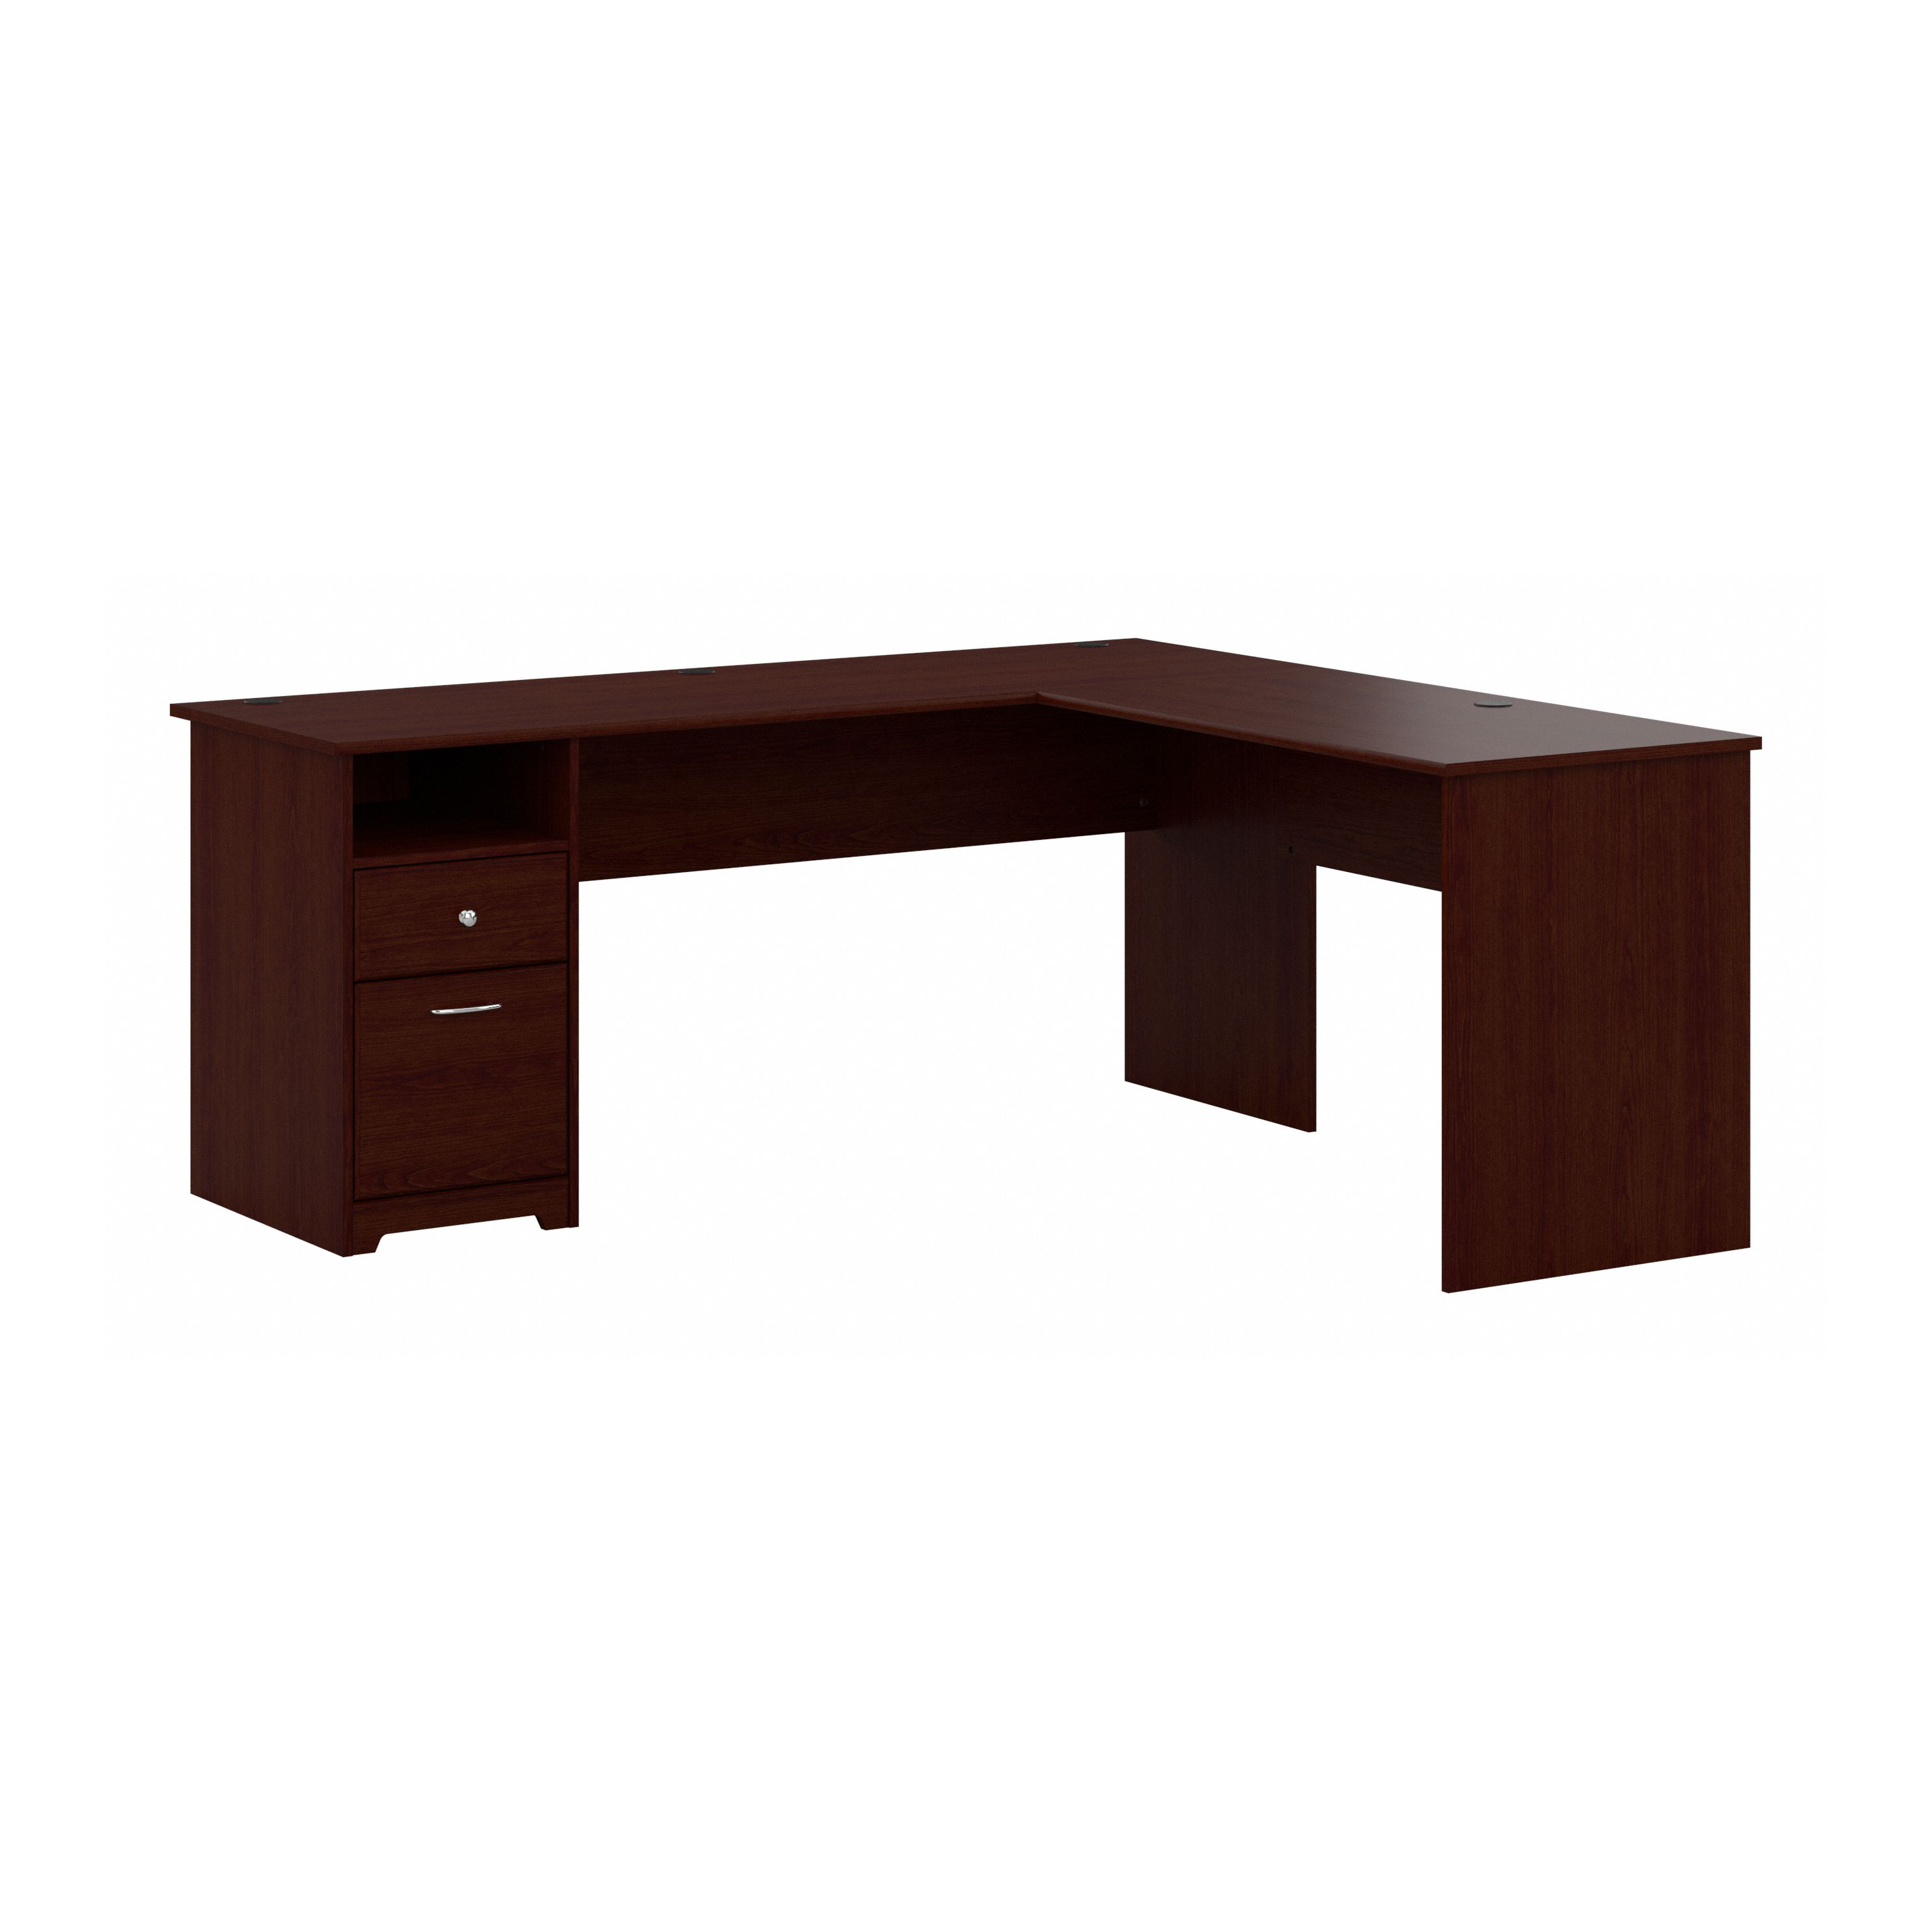 Shop Bush Furniture Cabot 72W L Shaped Computer Desk with Drawers 02 CAB051HVC #color_harvest cherry